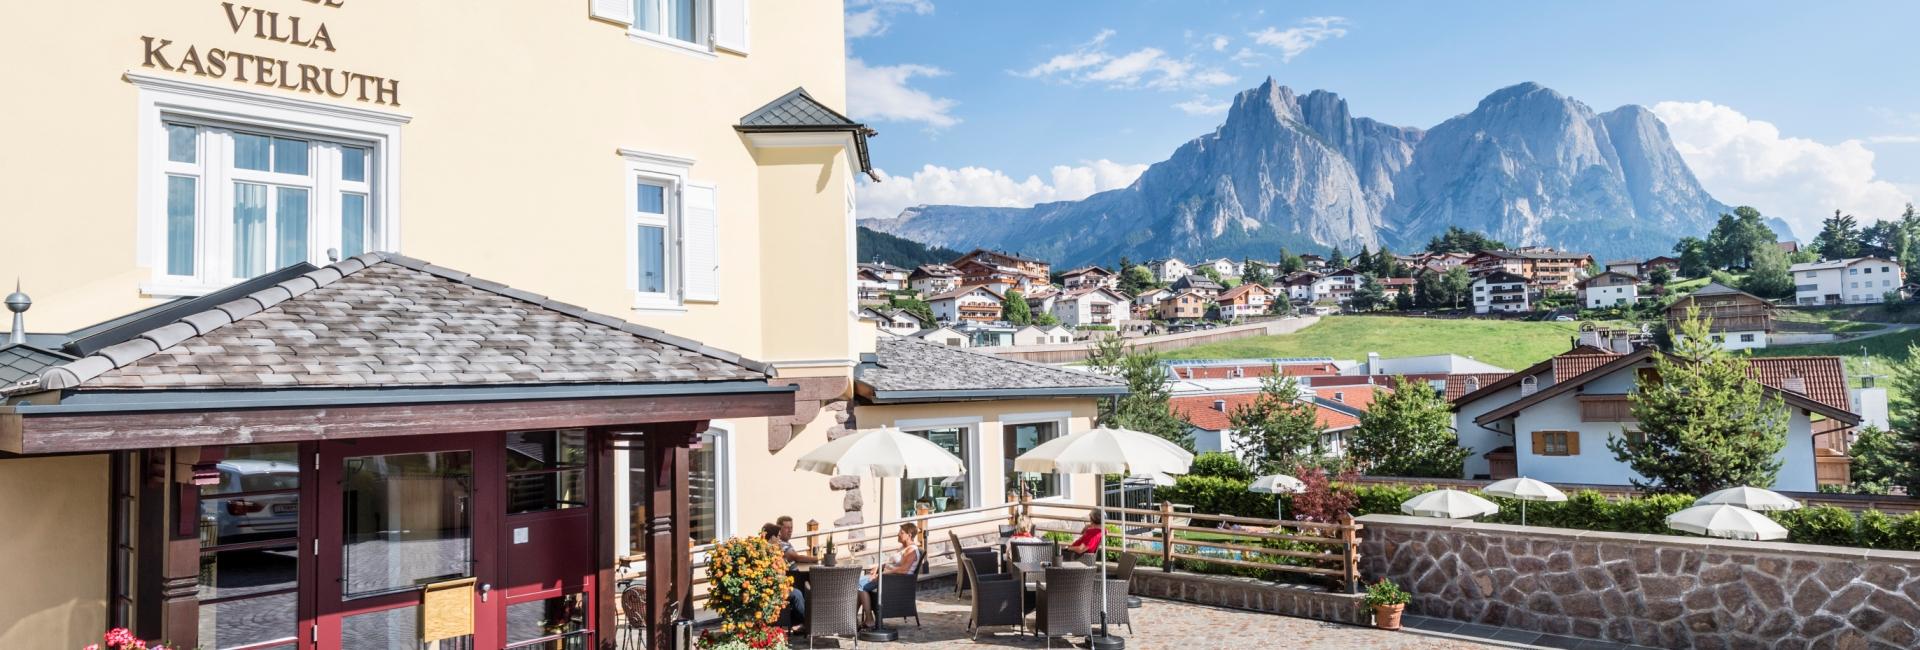 Hotel Villa Kastelruth in South Tyrol